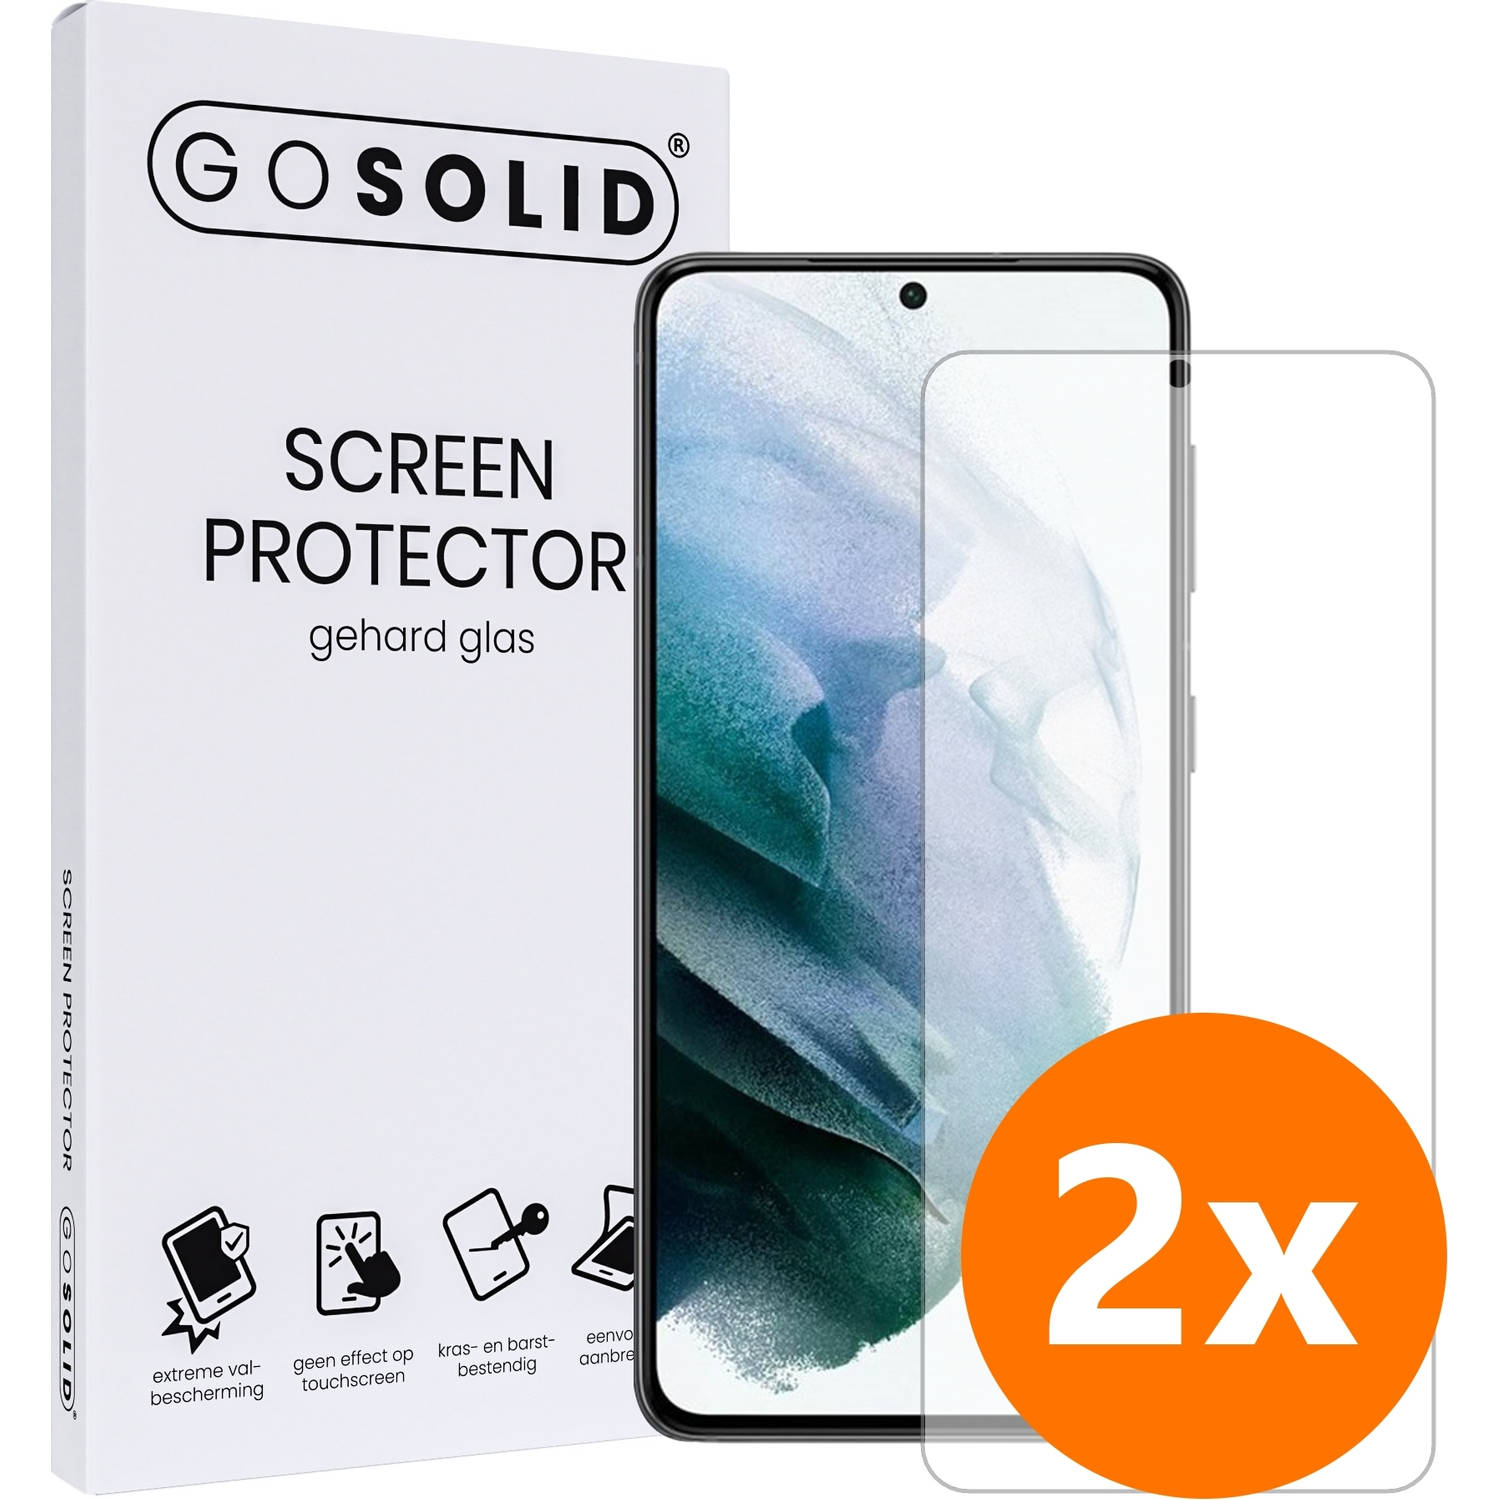 GO SOLID! Xiaomi Mi Note10 screenprotector gehard glas - Duopack